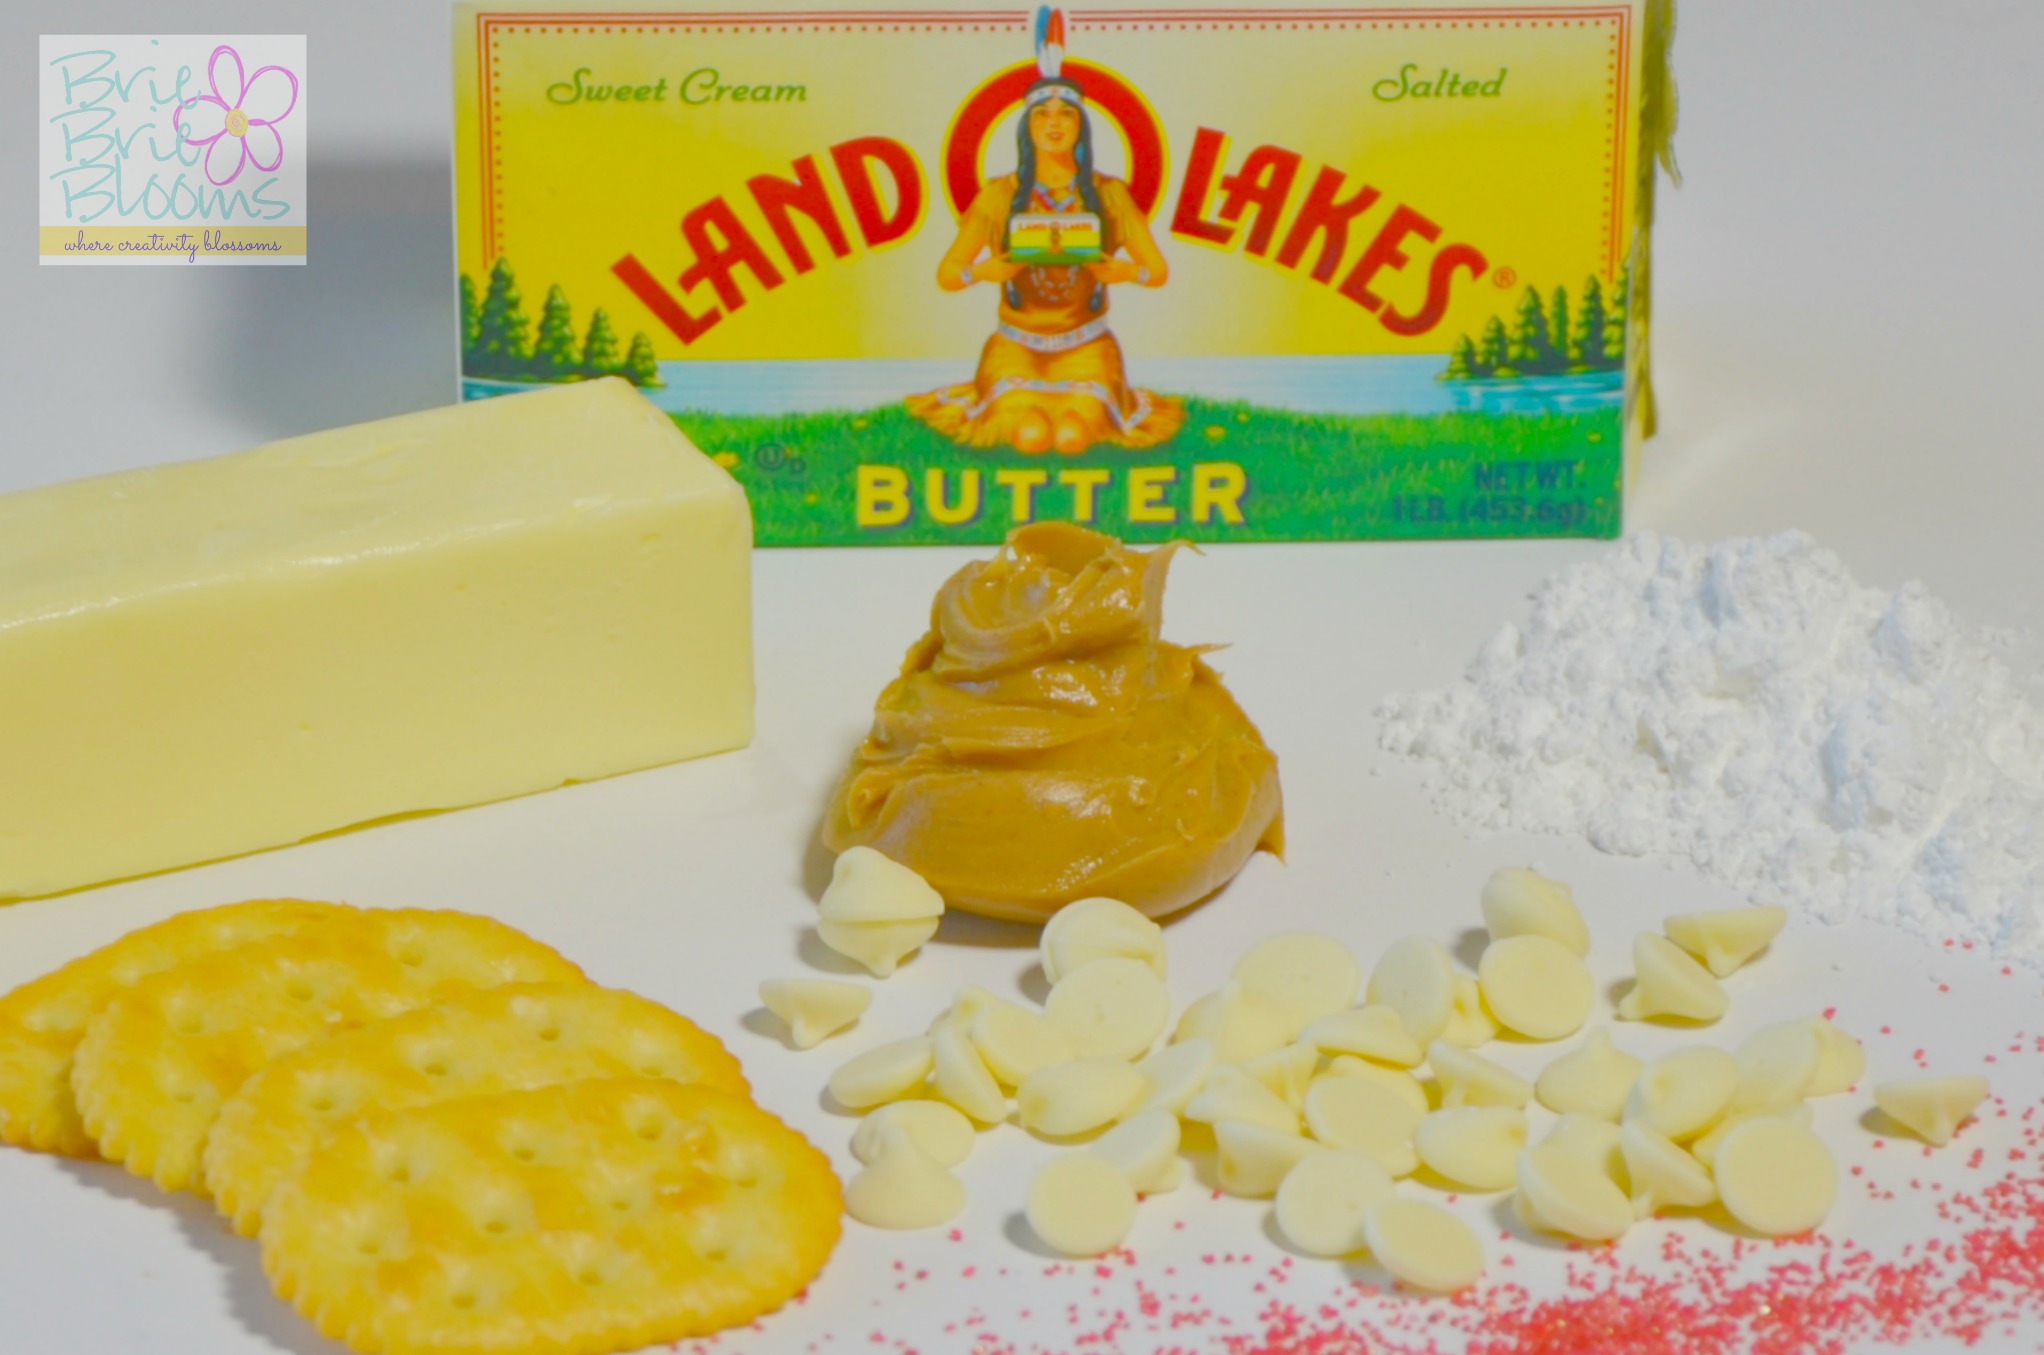 Peanut Butter Santa Hats ingredients #HolidayButter #shop #cbias